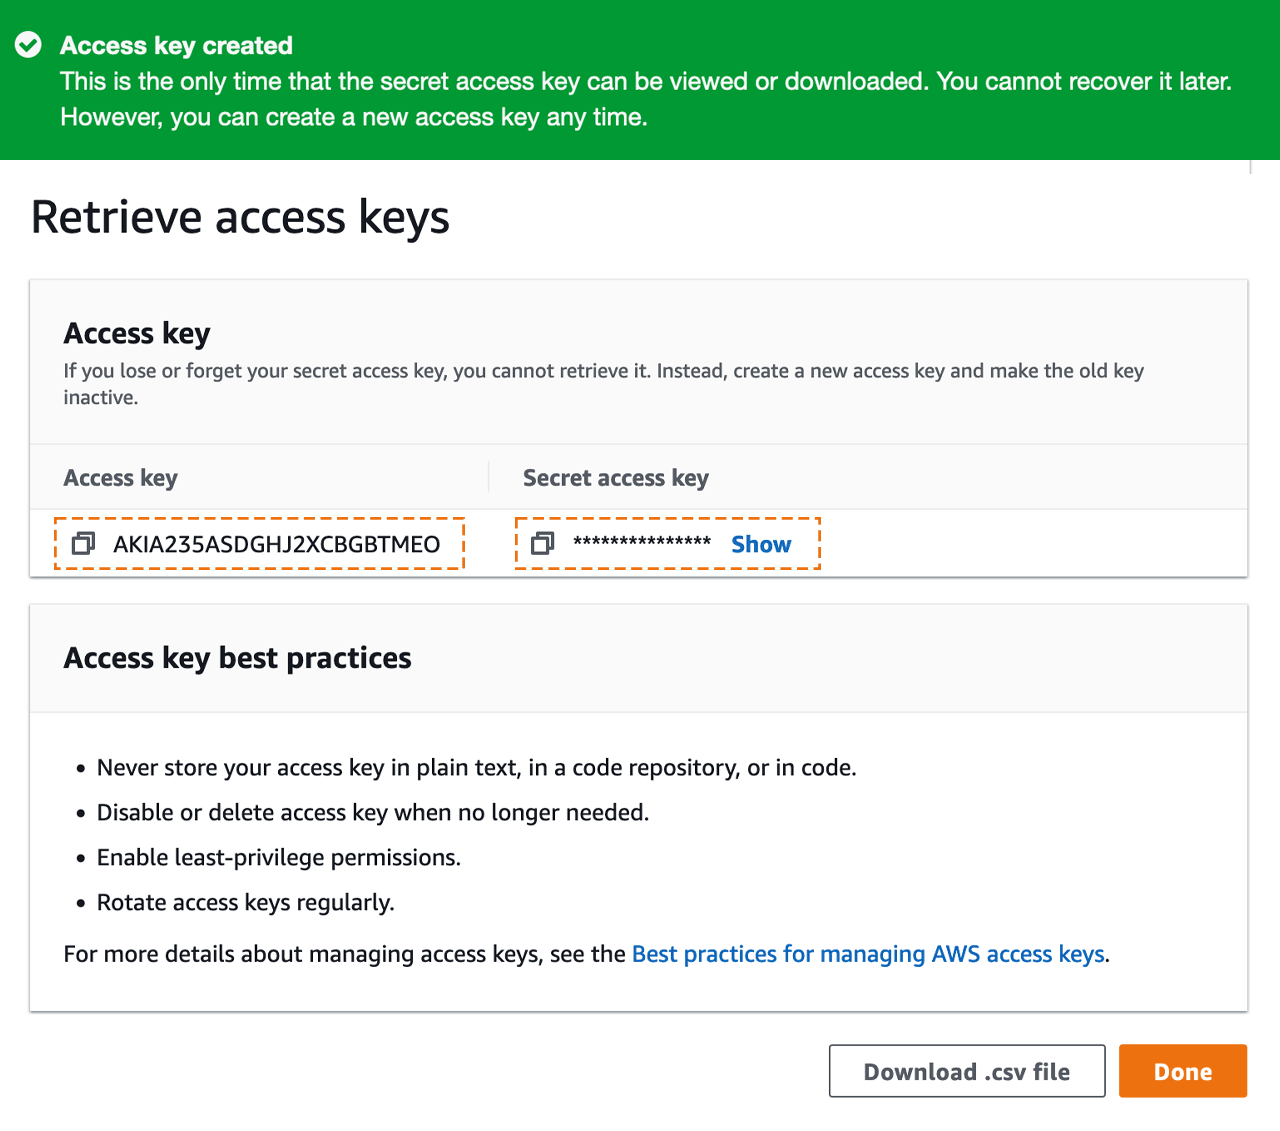 Access Key Id and Secret access key